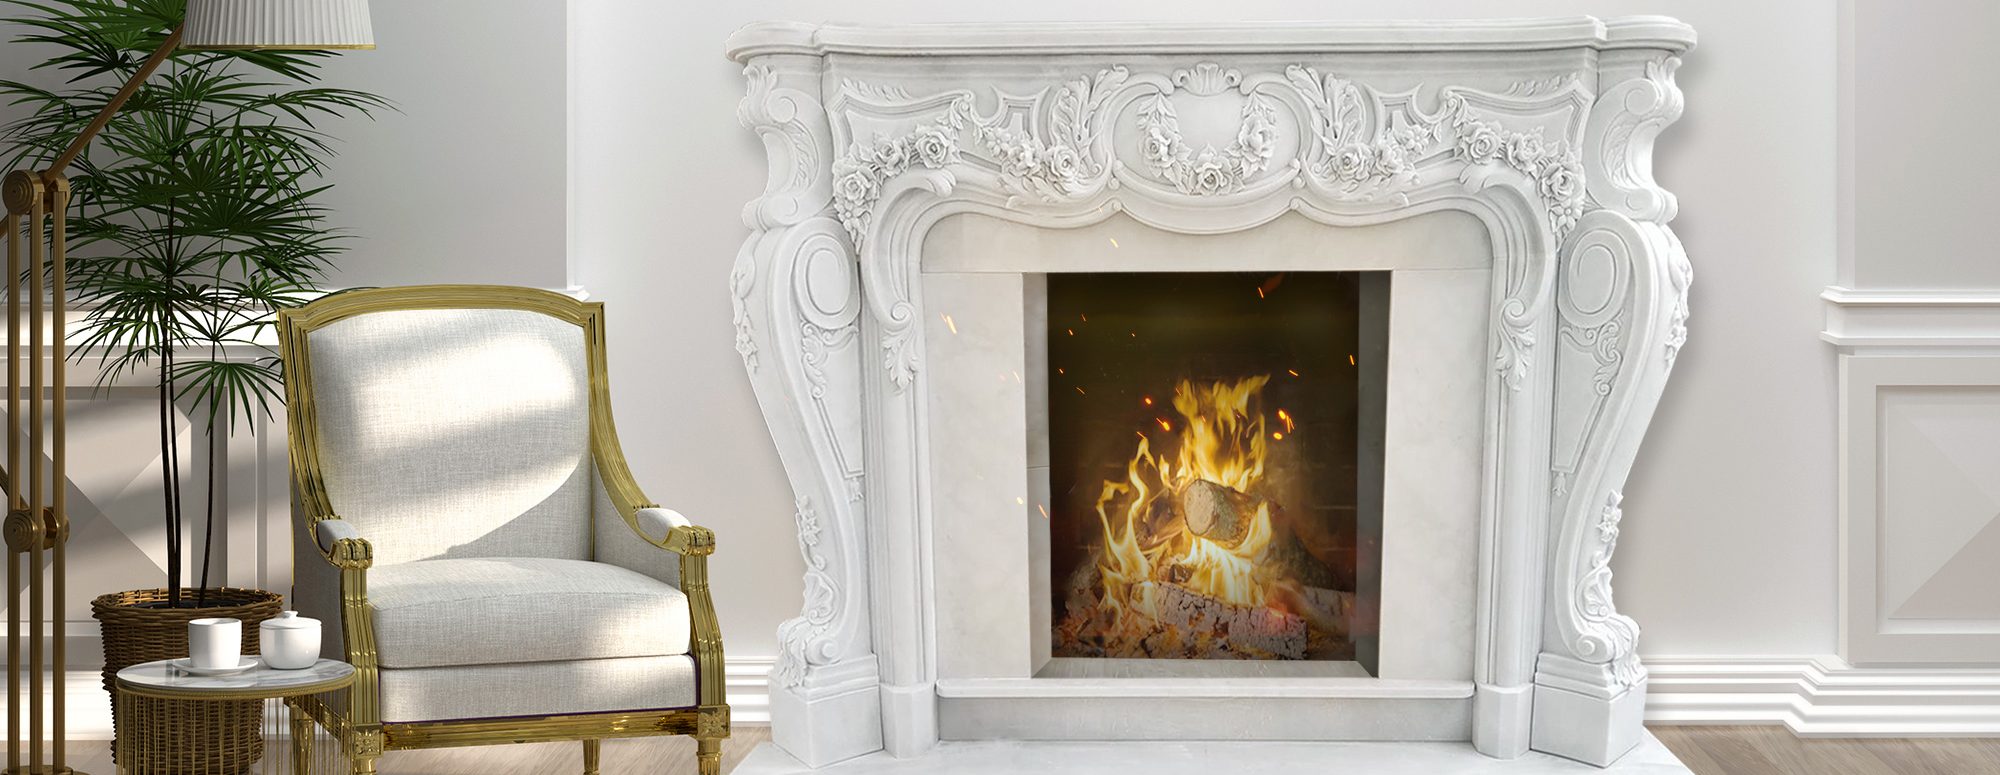 fireplace-decorative-marble